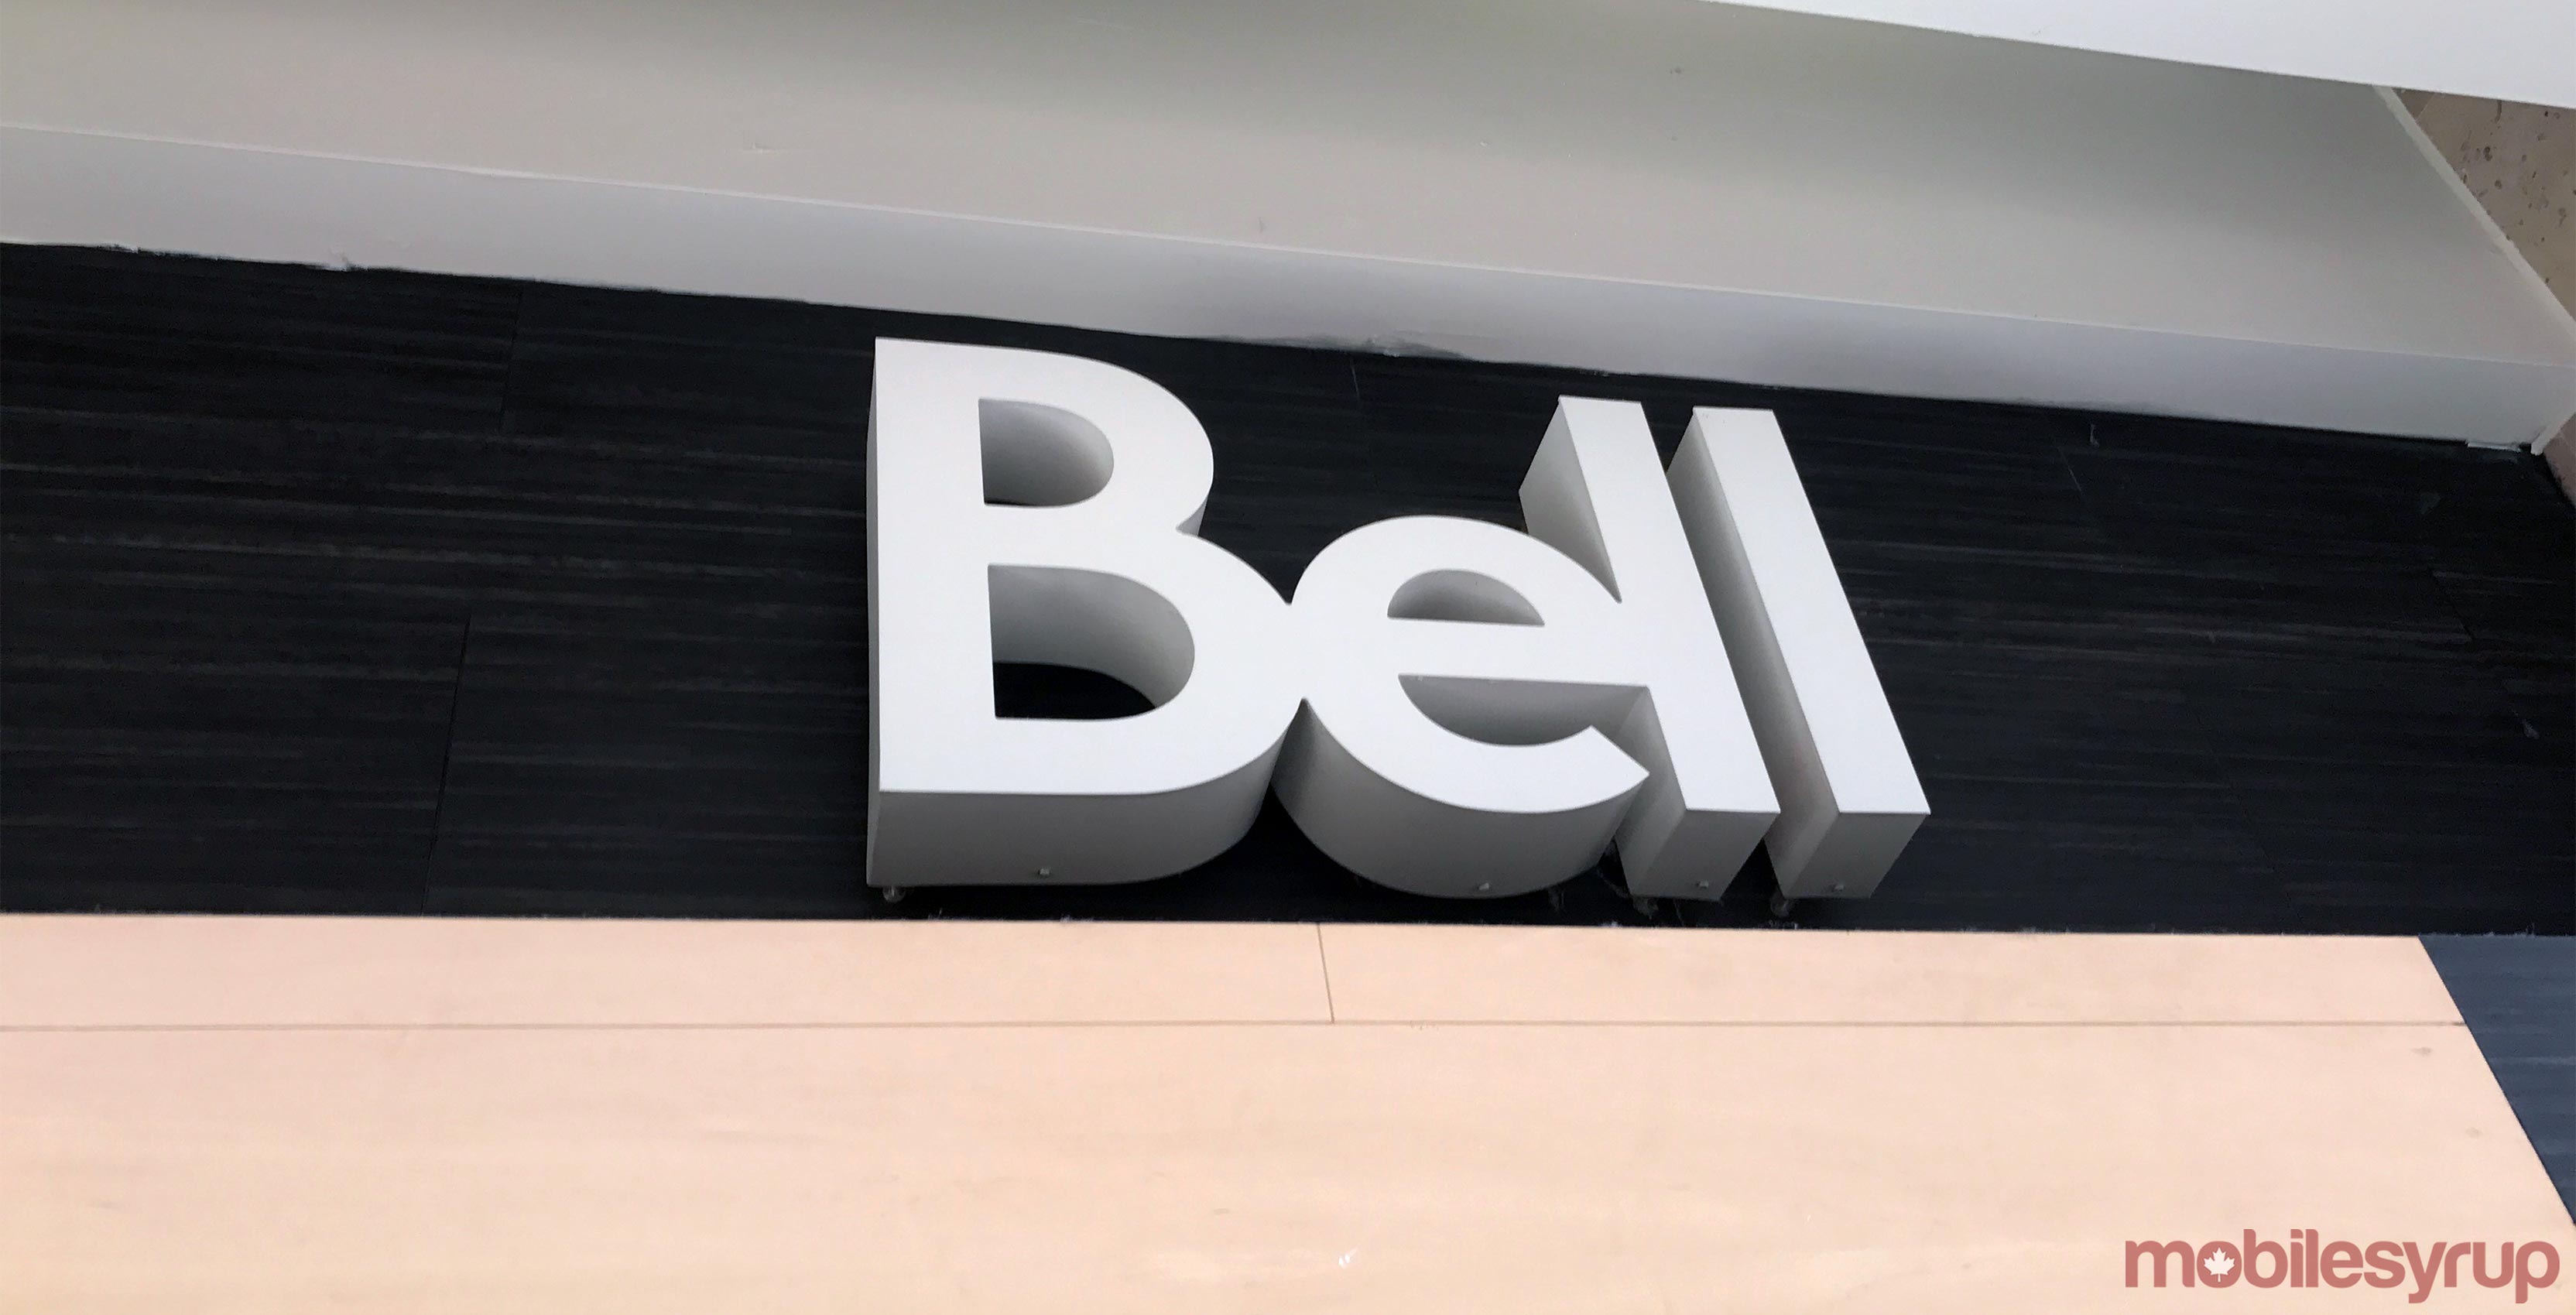 Bell Canada logo